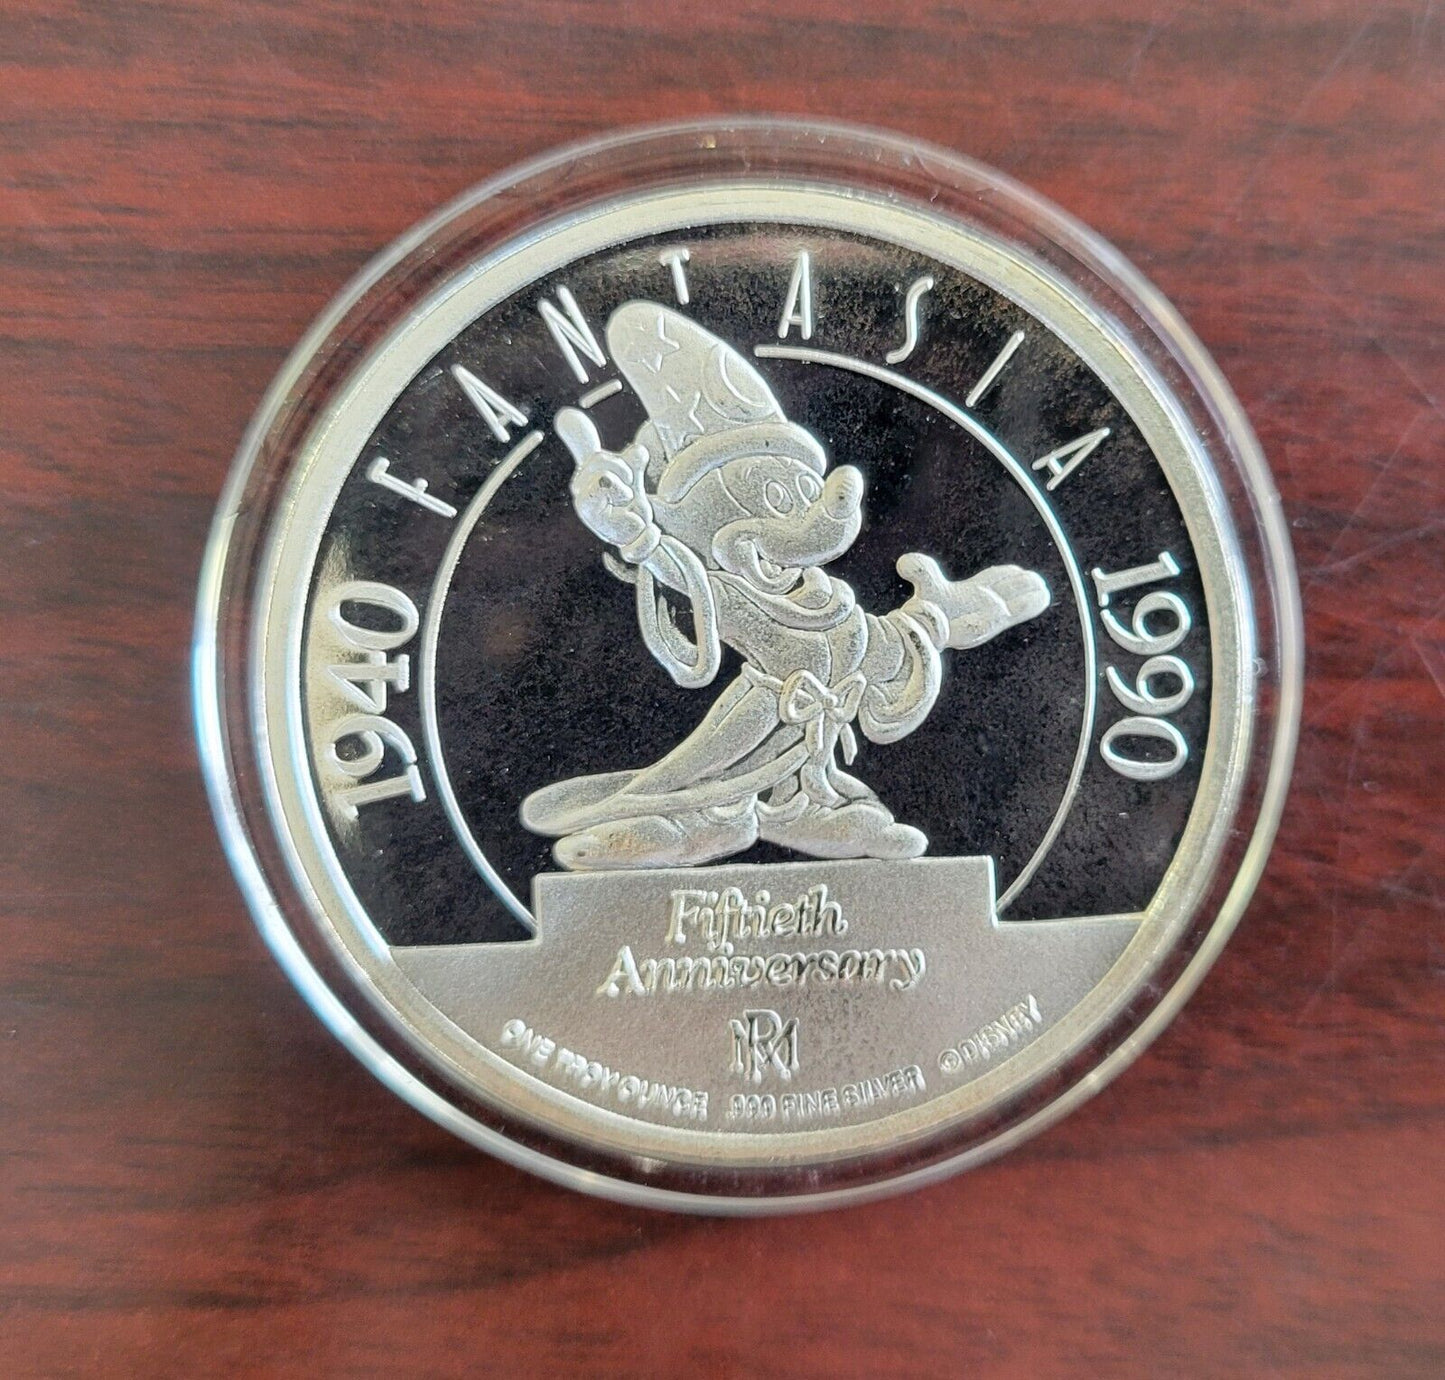 Chernabog Fantasia Enameled Coin 1 Troy oz .999 Fine Silver Round Disney